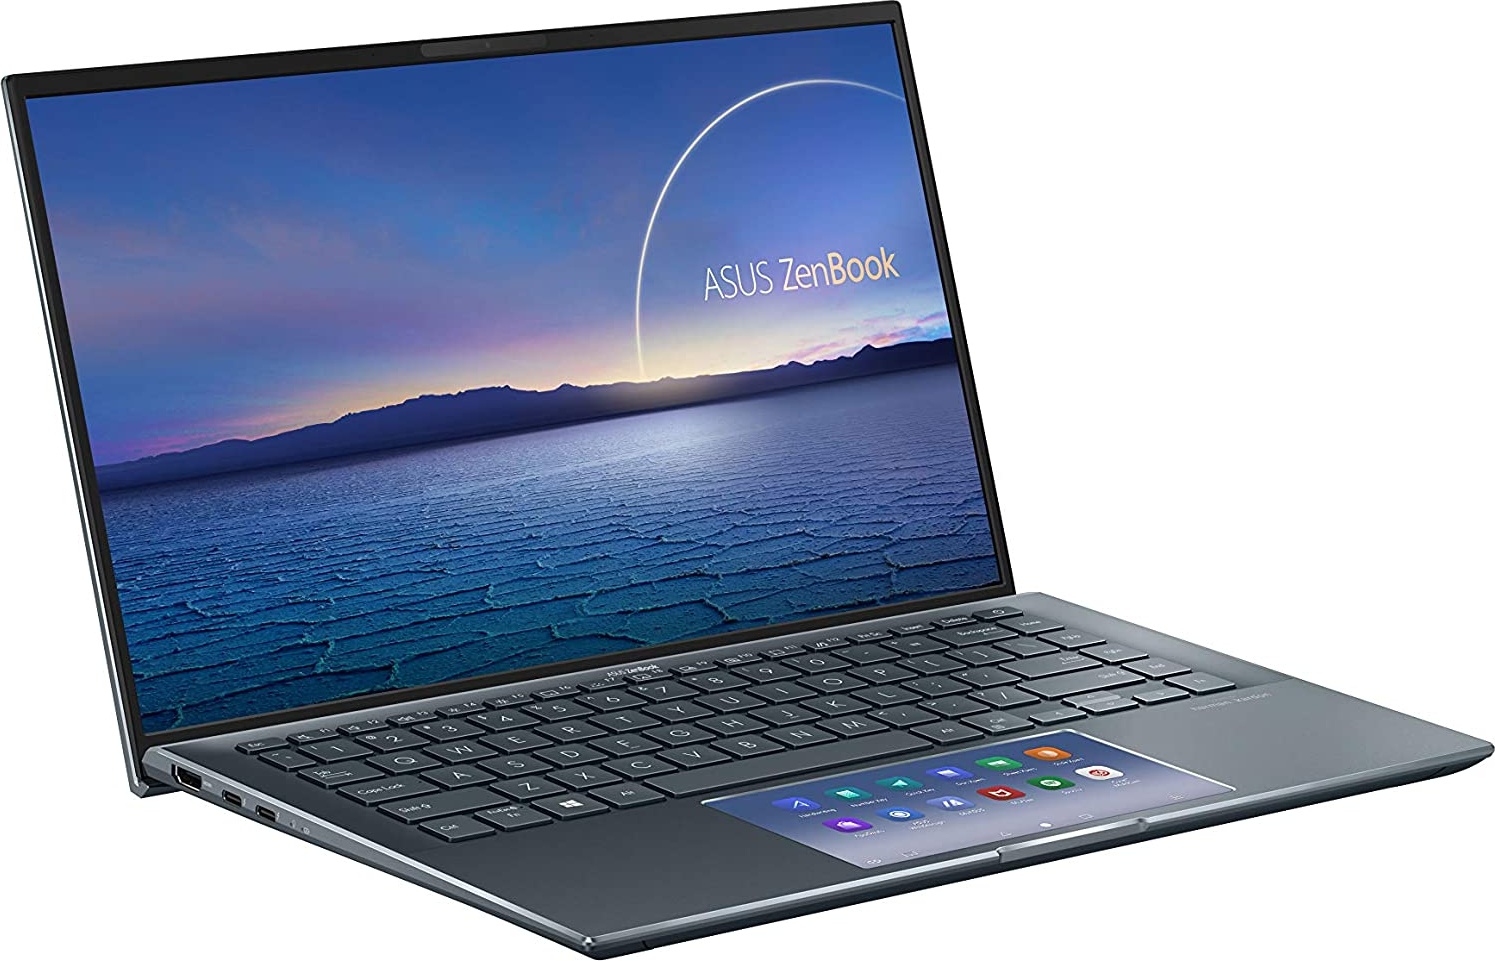 ASUS ZenBook 14 Ultra-Slim Laptop 14” FHD NanoEdge Bezel Display, Intel Core i7-1165G7, NVIDIA MX450, 16GB RAM, 512GB SSD, ScreenPad 2.0, Thunderbolt 4, Windows 10 Pro, Pine Grey, UX435EG-XH74